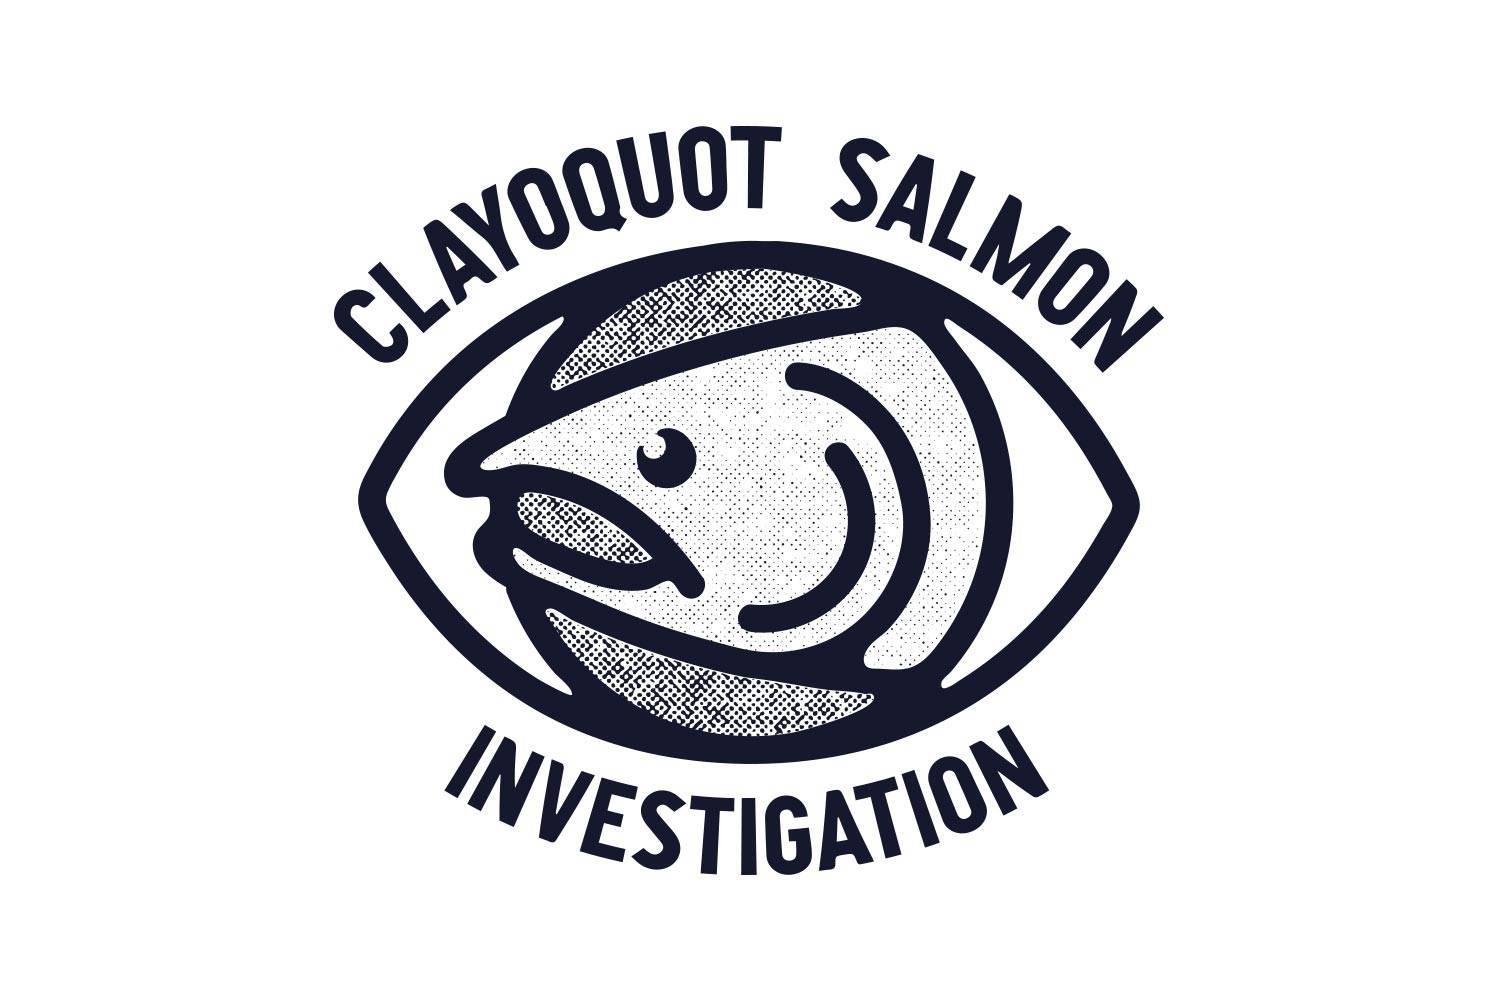 clayoquot_salmon_investigation2